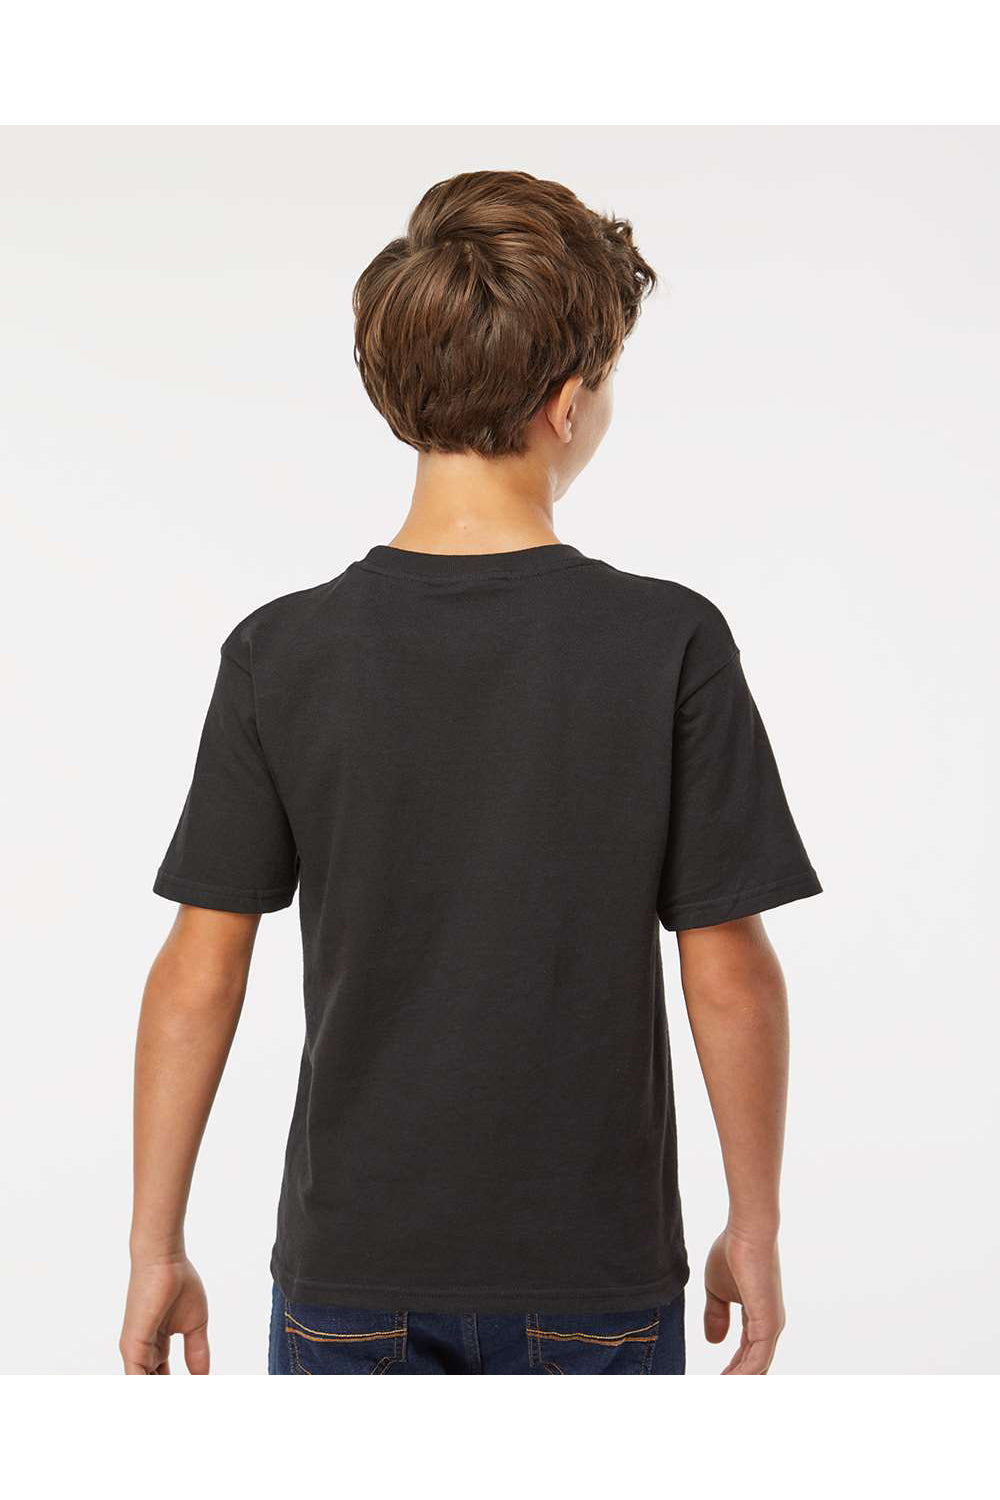 M&O 4850 Youth Gold Soft Touch Short Sleeve Crewneck T-Shirt Black Model Back